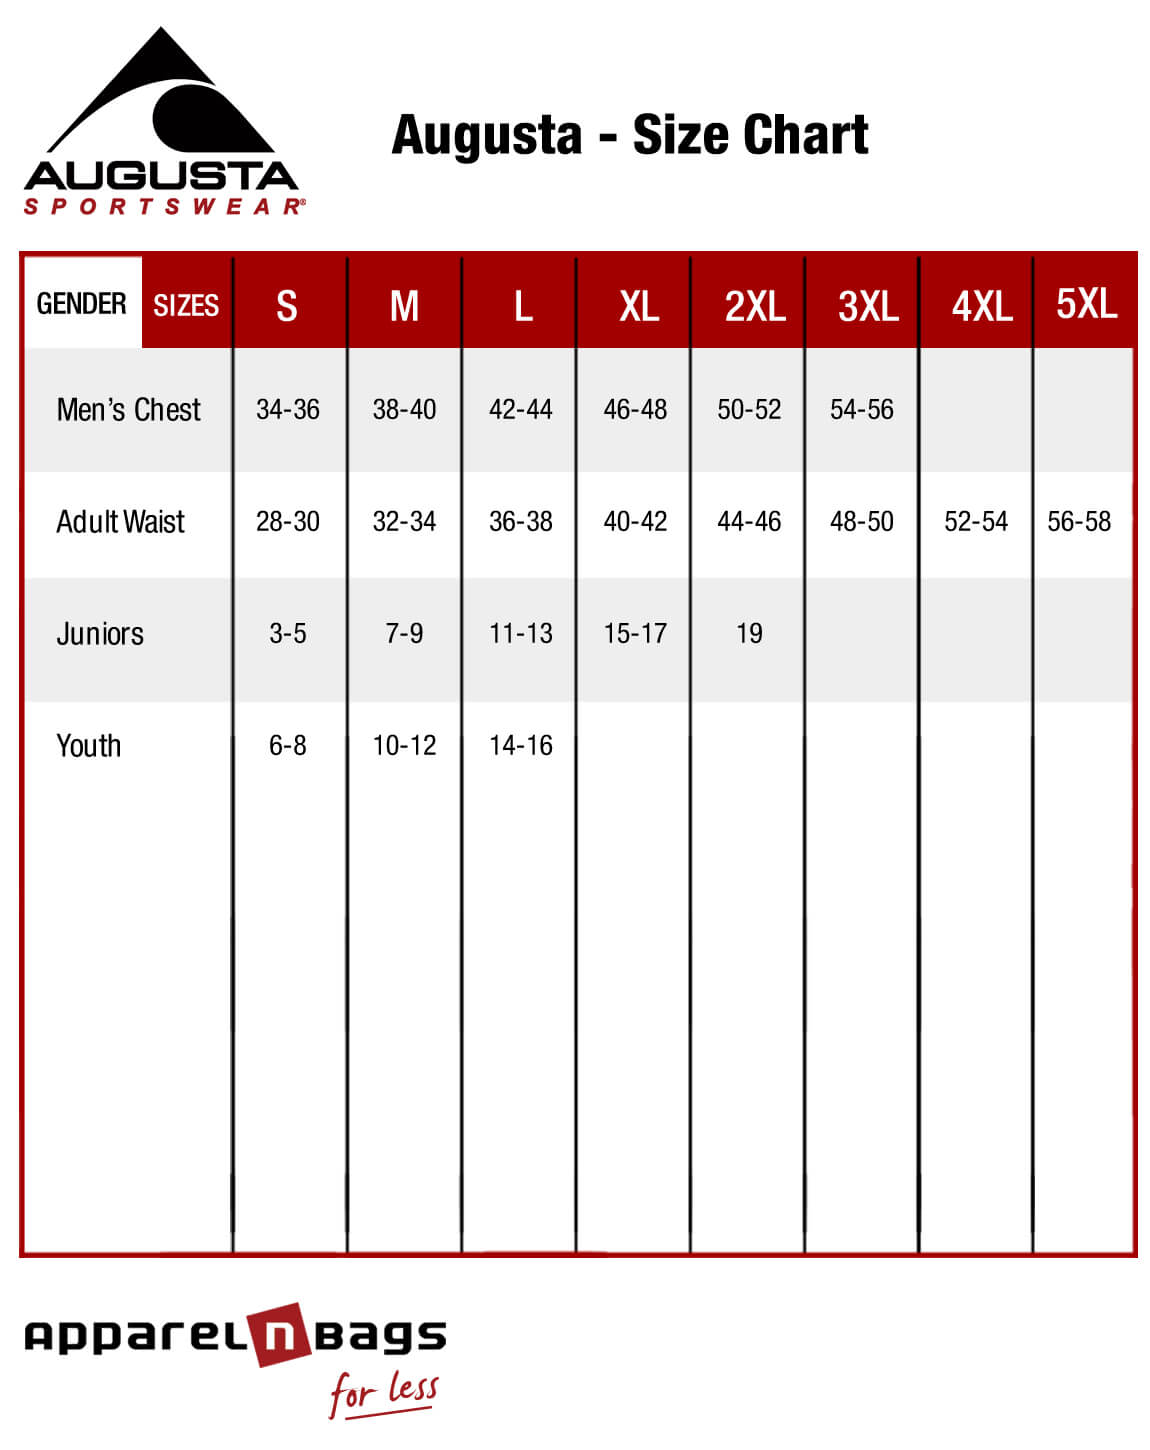 Augusta Sportswear - Size Chart - ApparelnBags.com